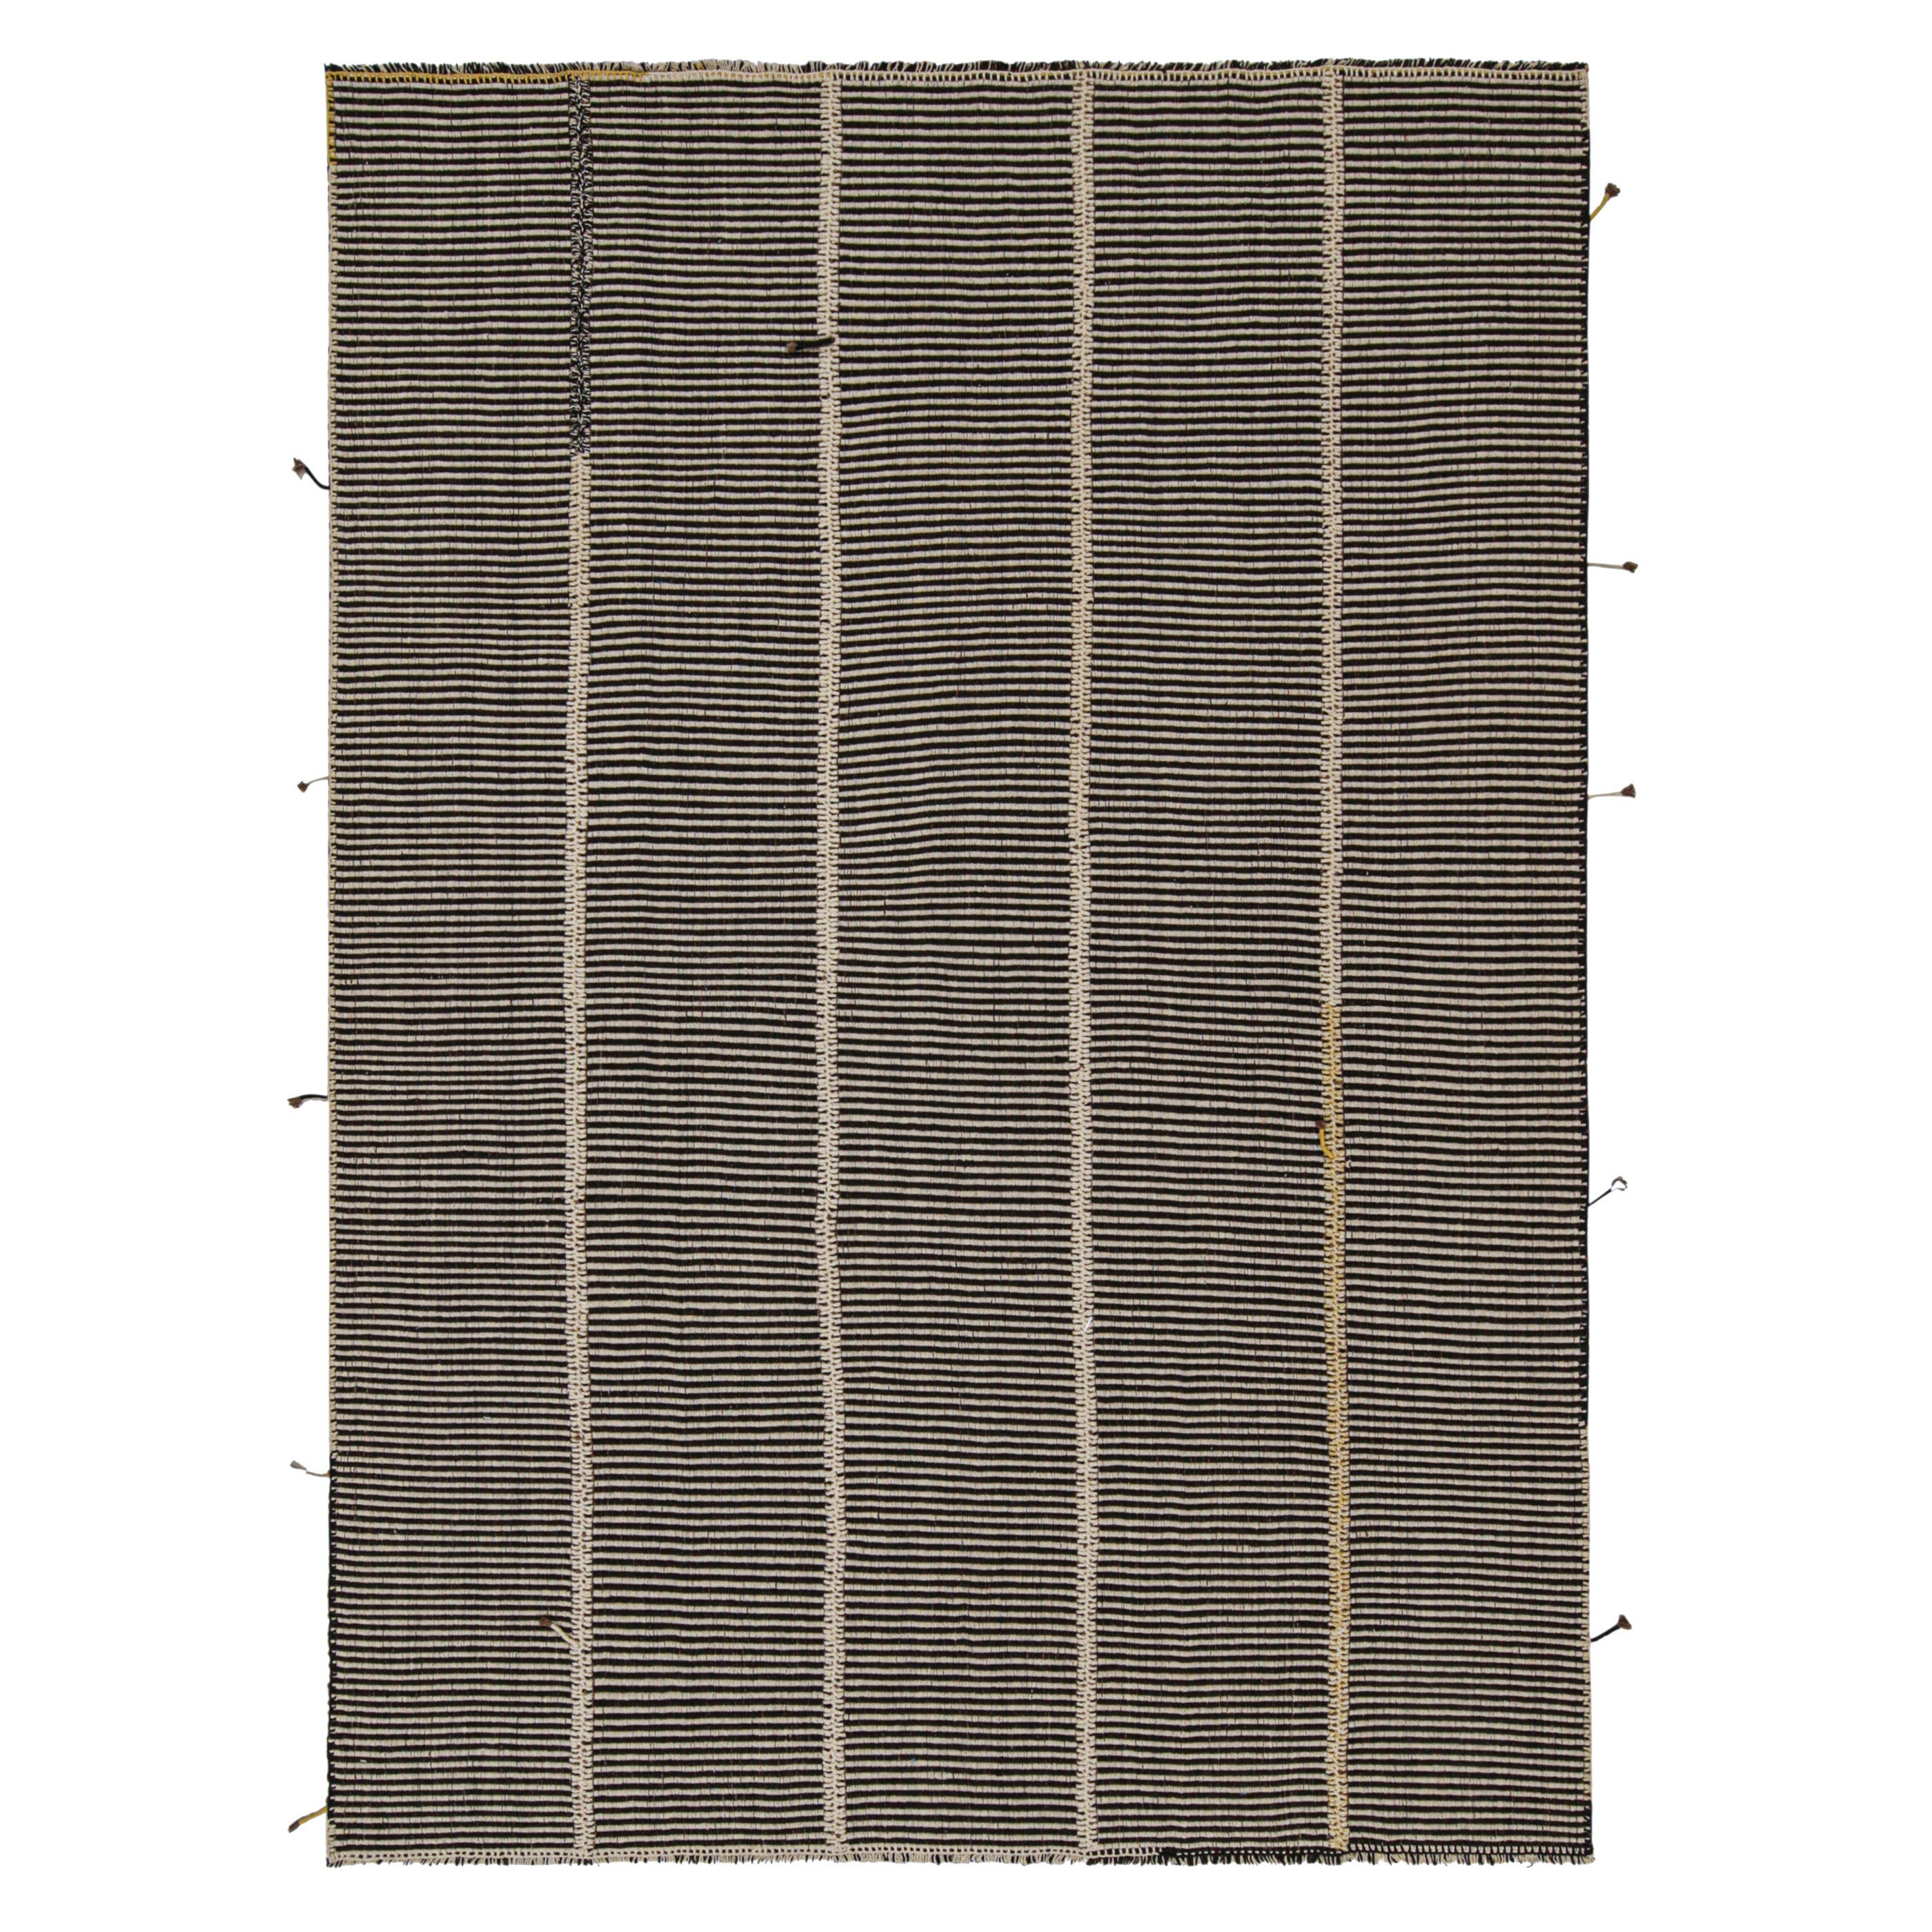 Rug & Kilim’s Contemporary Kilim Rug in Beige and Black Stripes